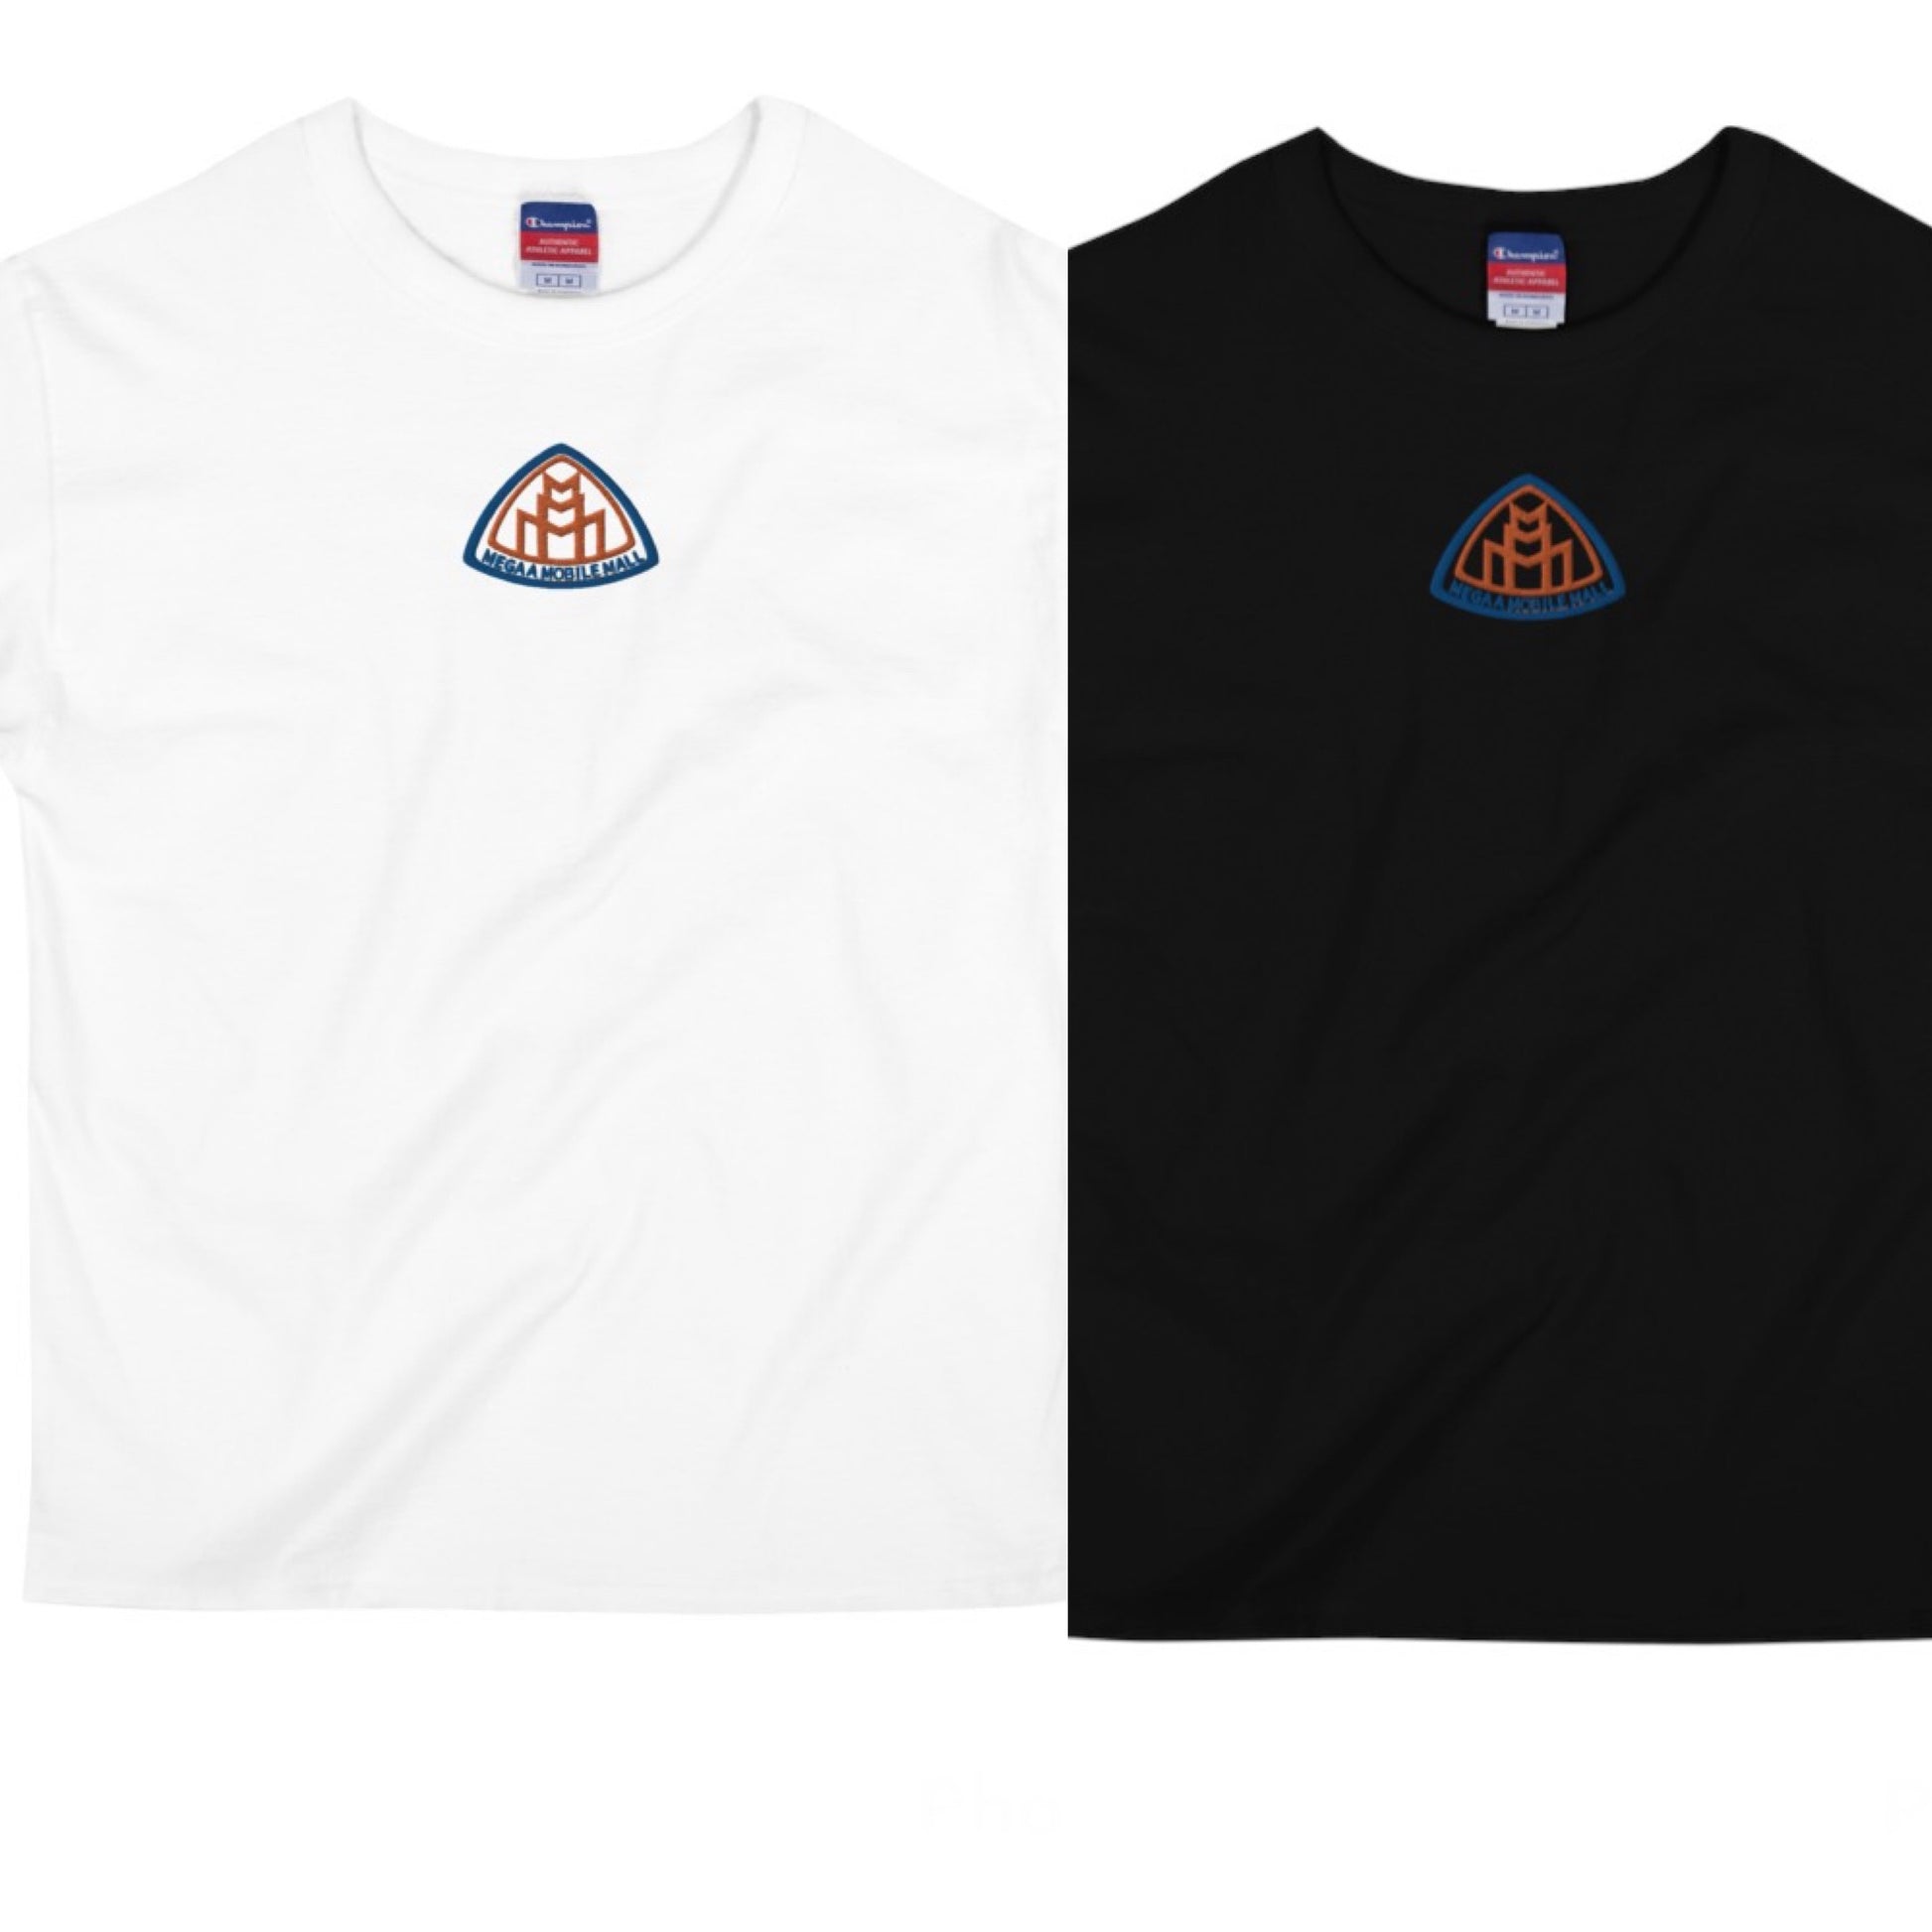 new york knicks colorway blue & orange megaamobilemal logo on black & white champion shirt